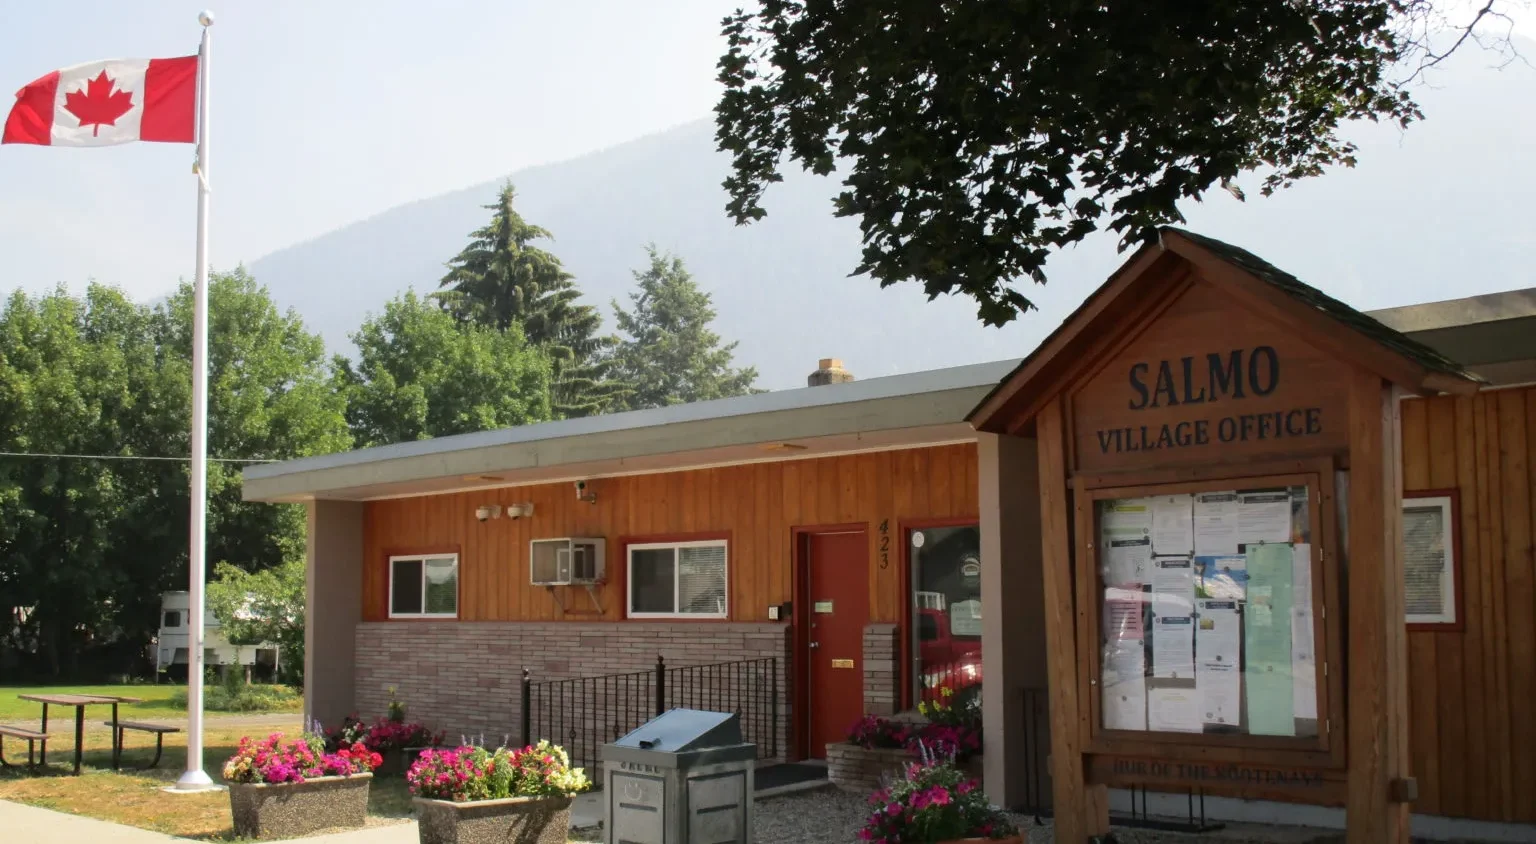 Village of Salmo City Hall, the Village Office